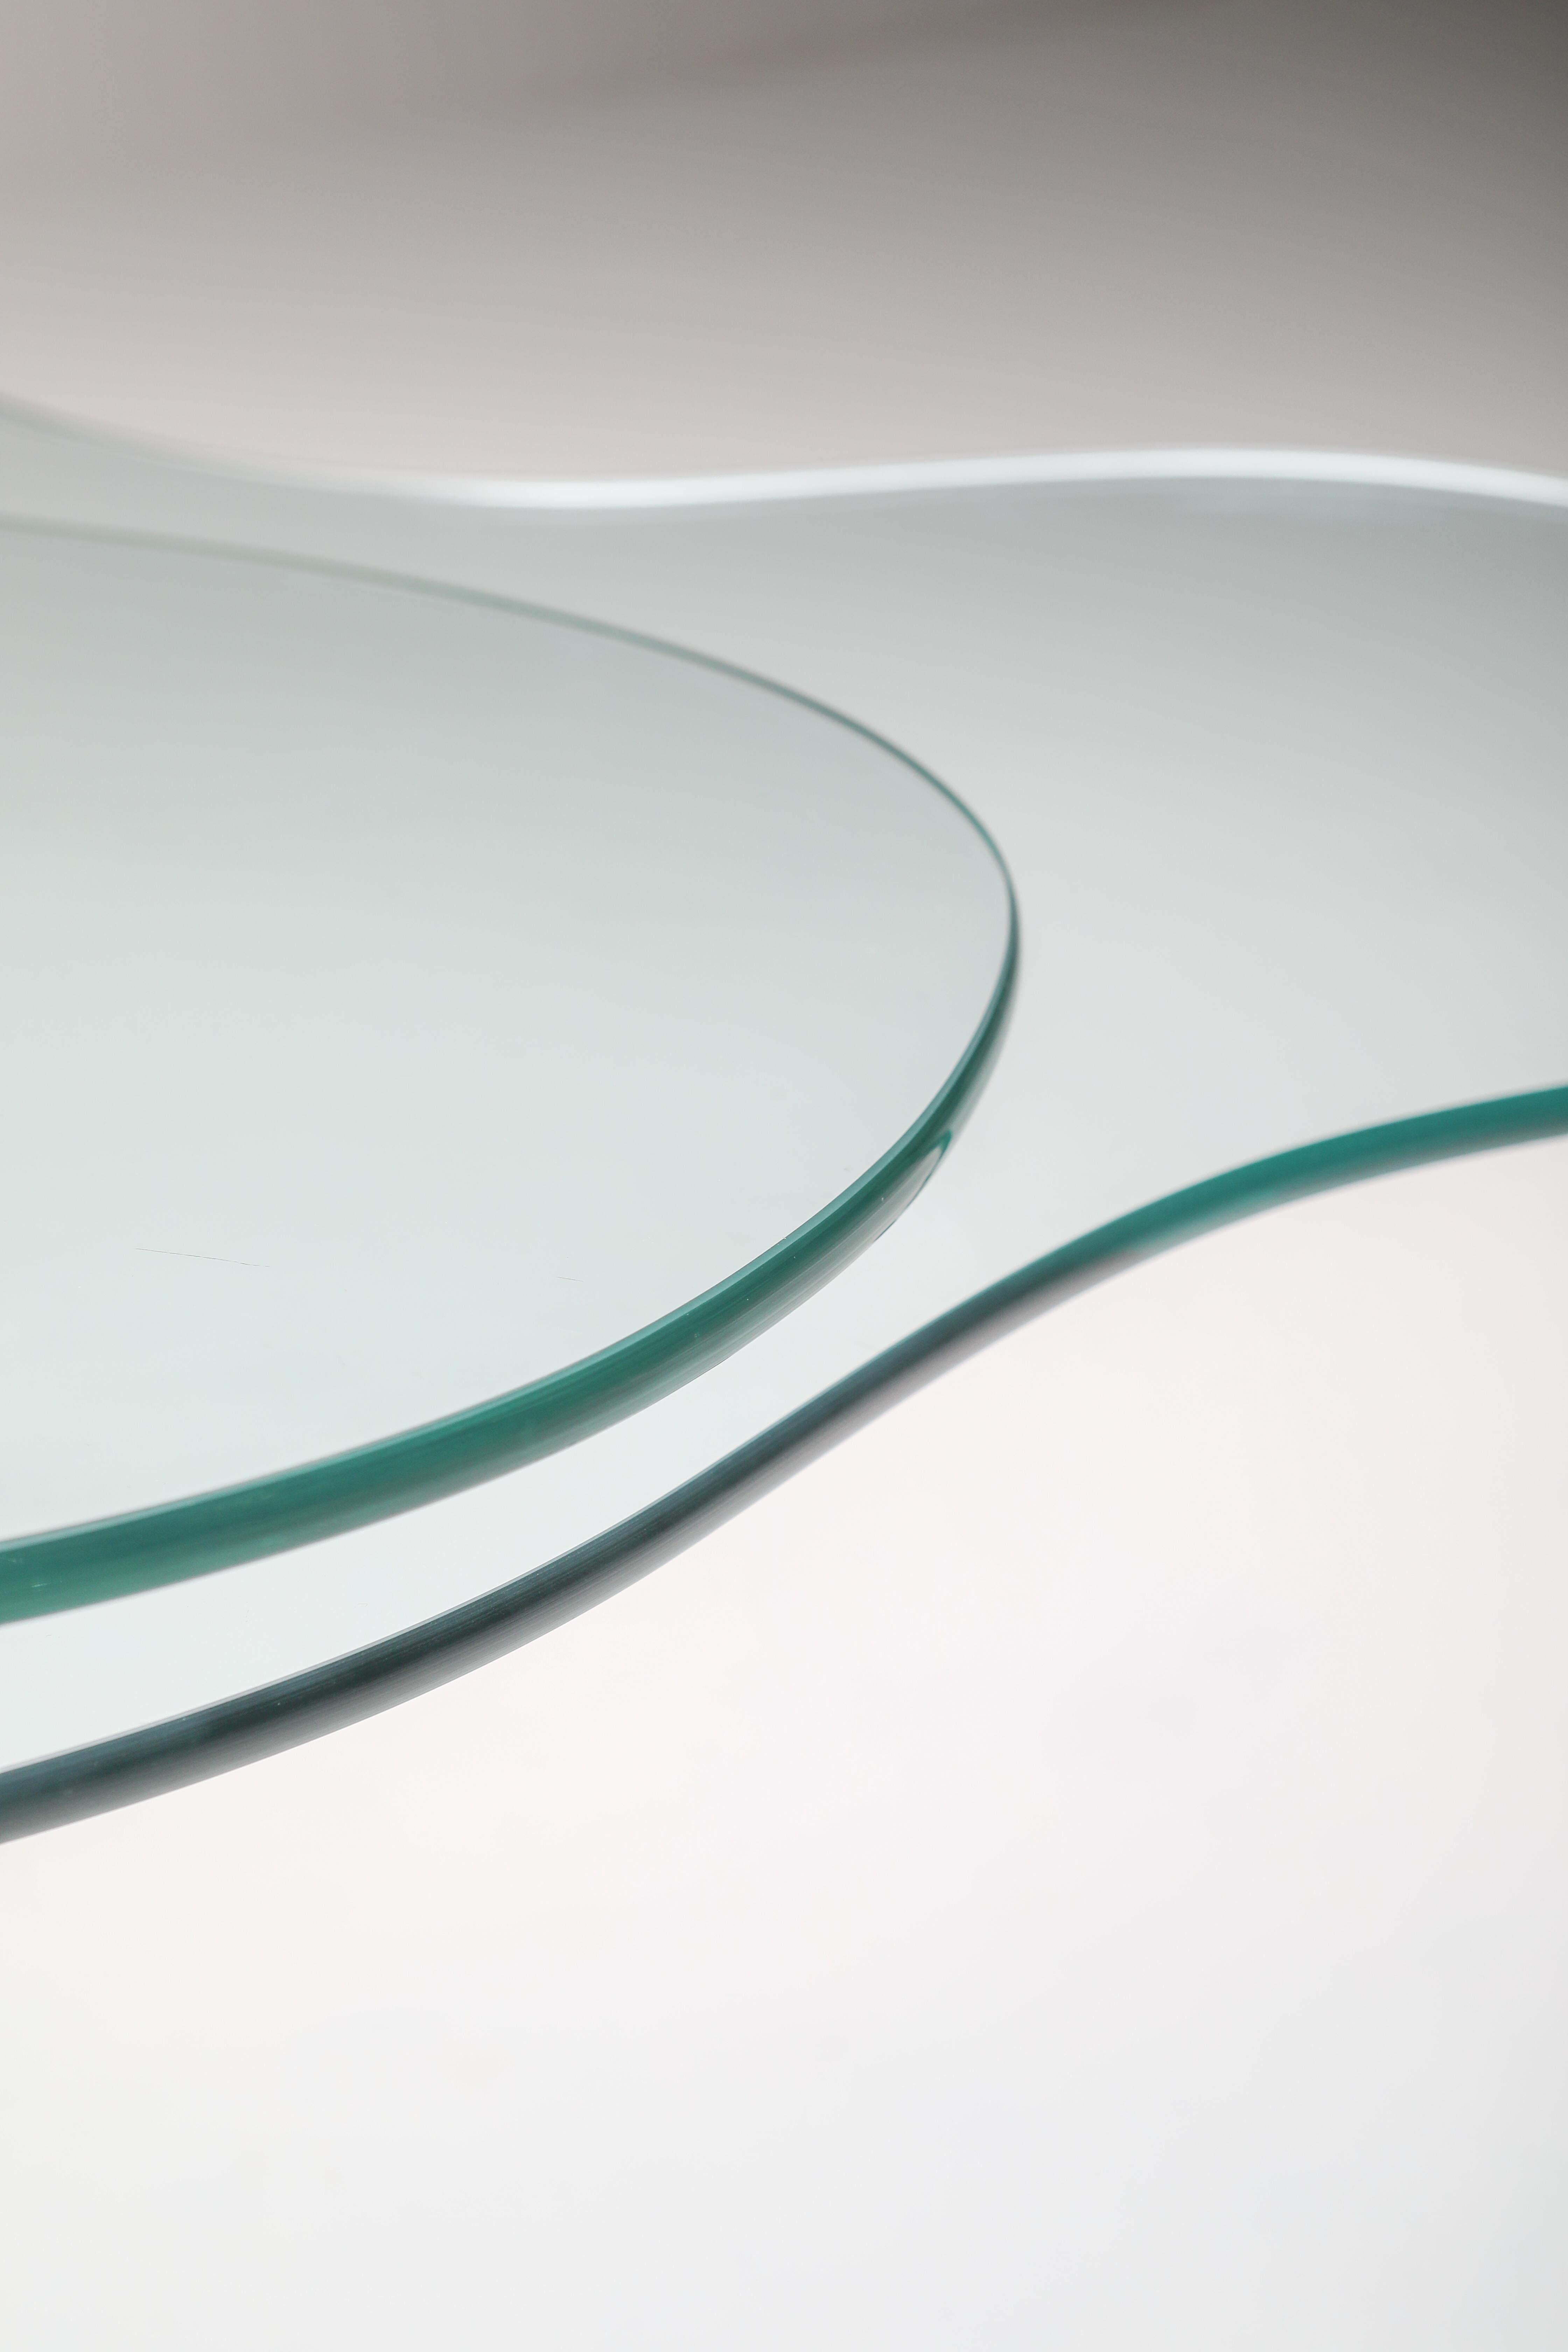 Saporiti Concrete and Glass Postmodern Coffee Table 2